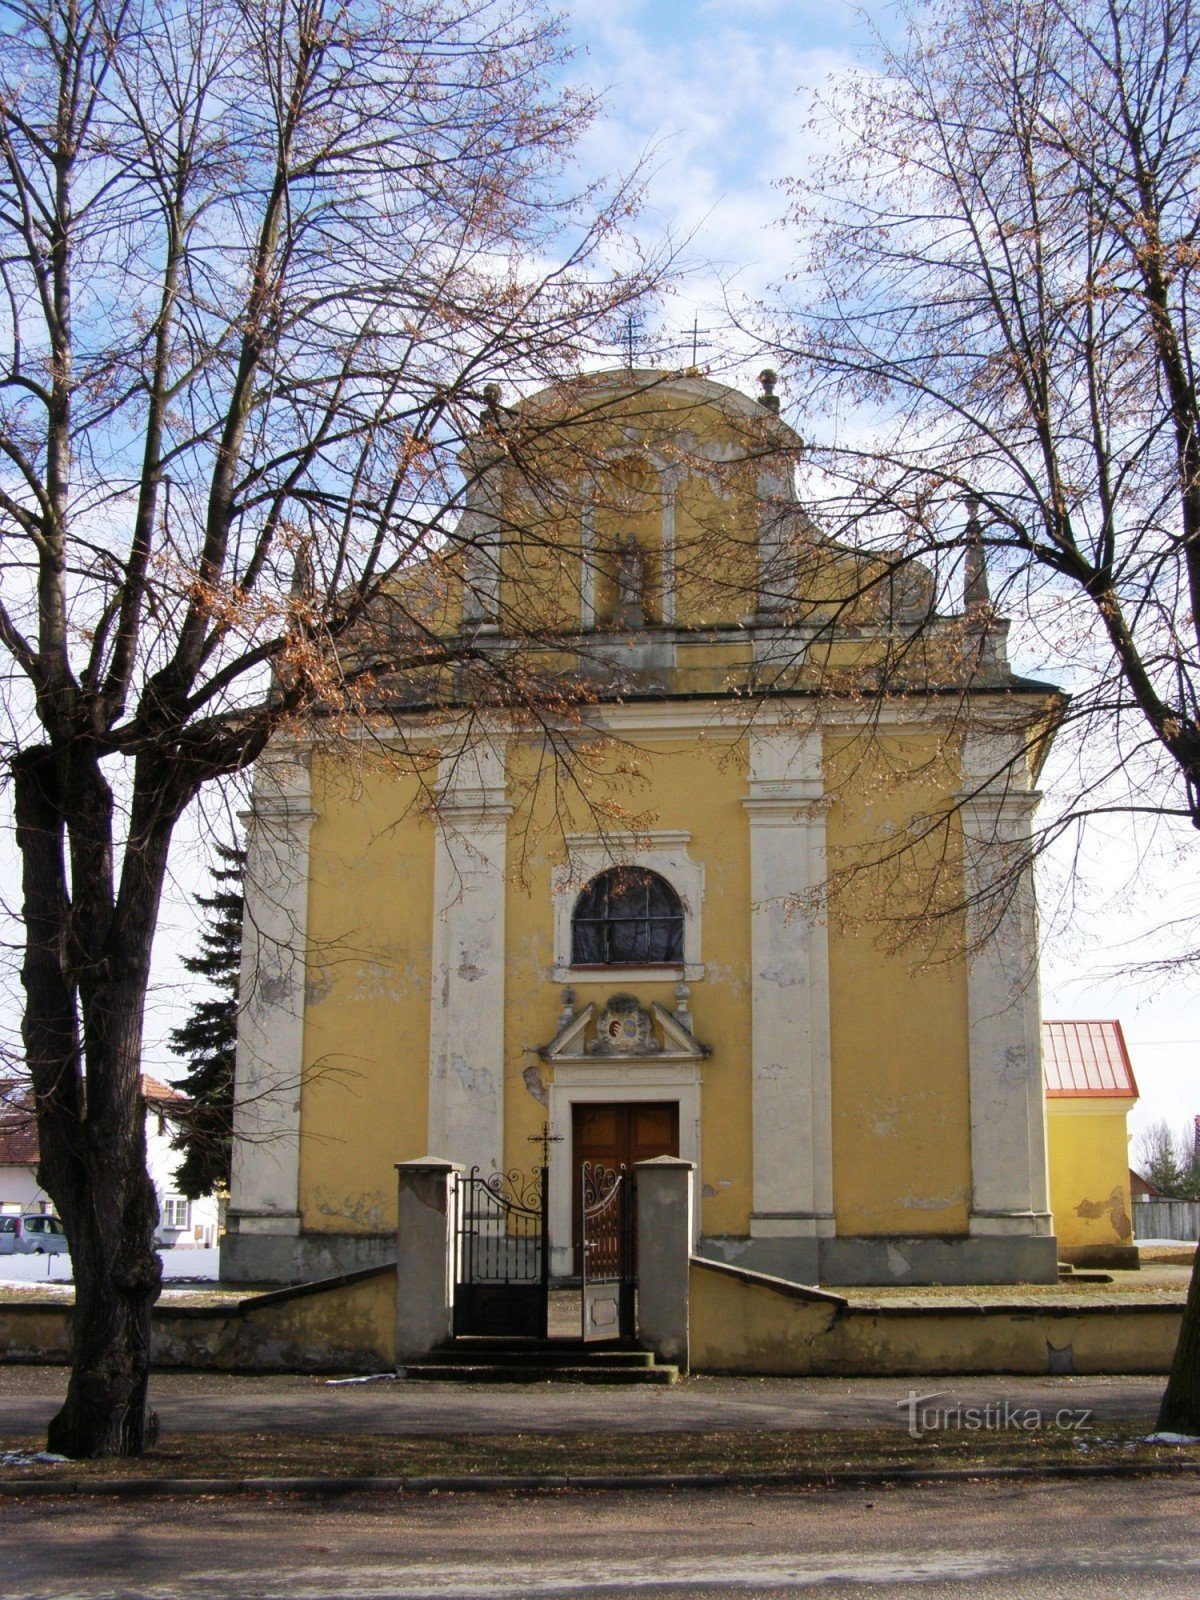 Lovčice - Εκκλησία του St. Βαρθολομαίος με το καμπαναριό